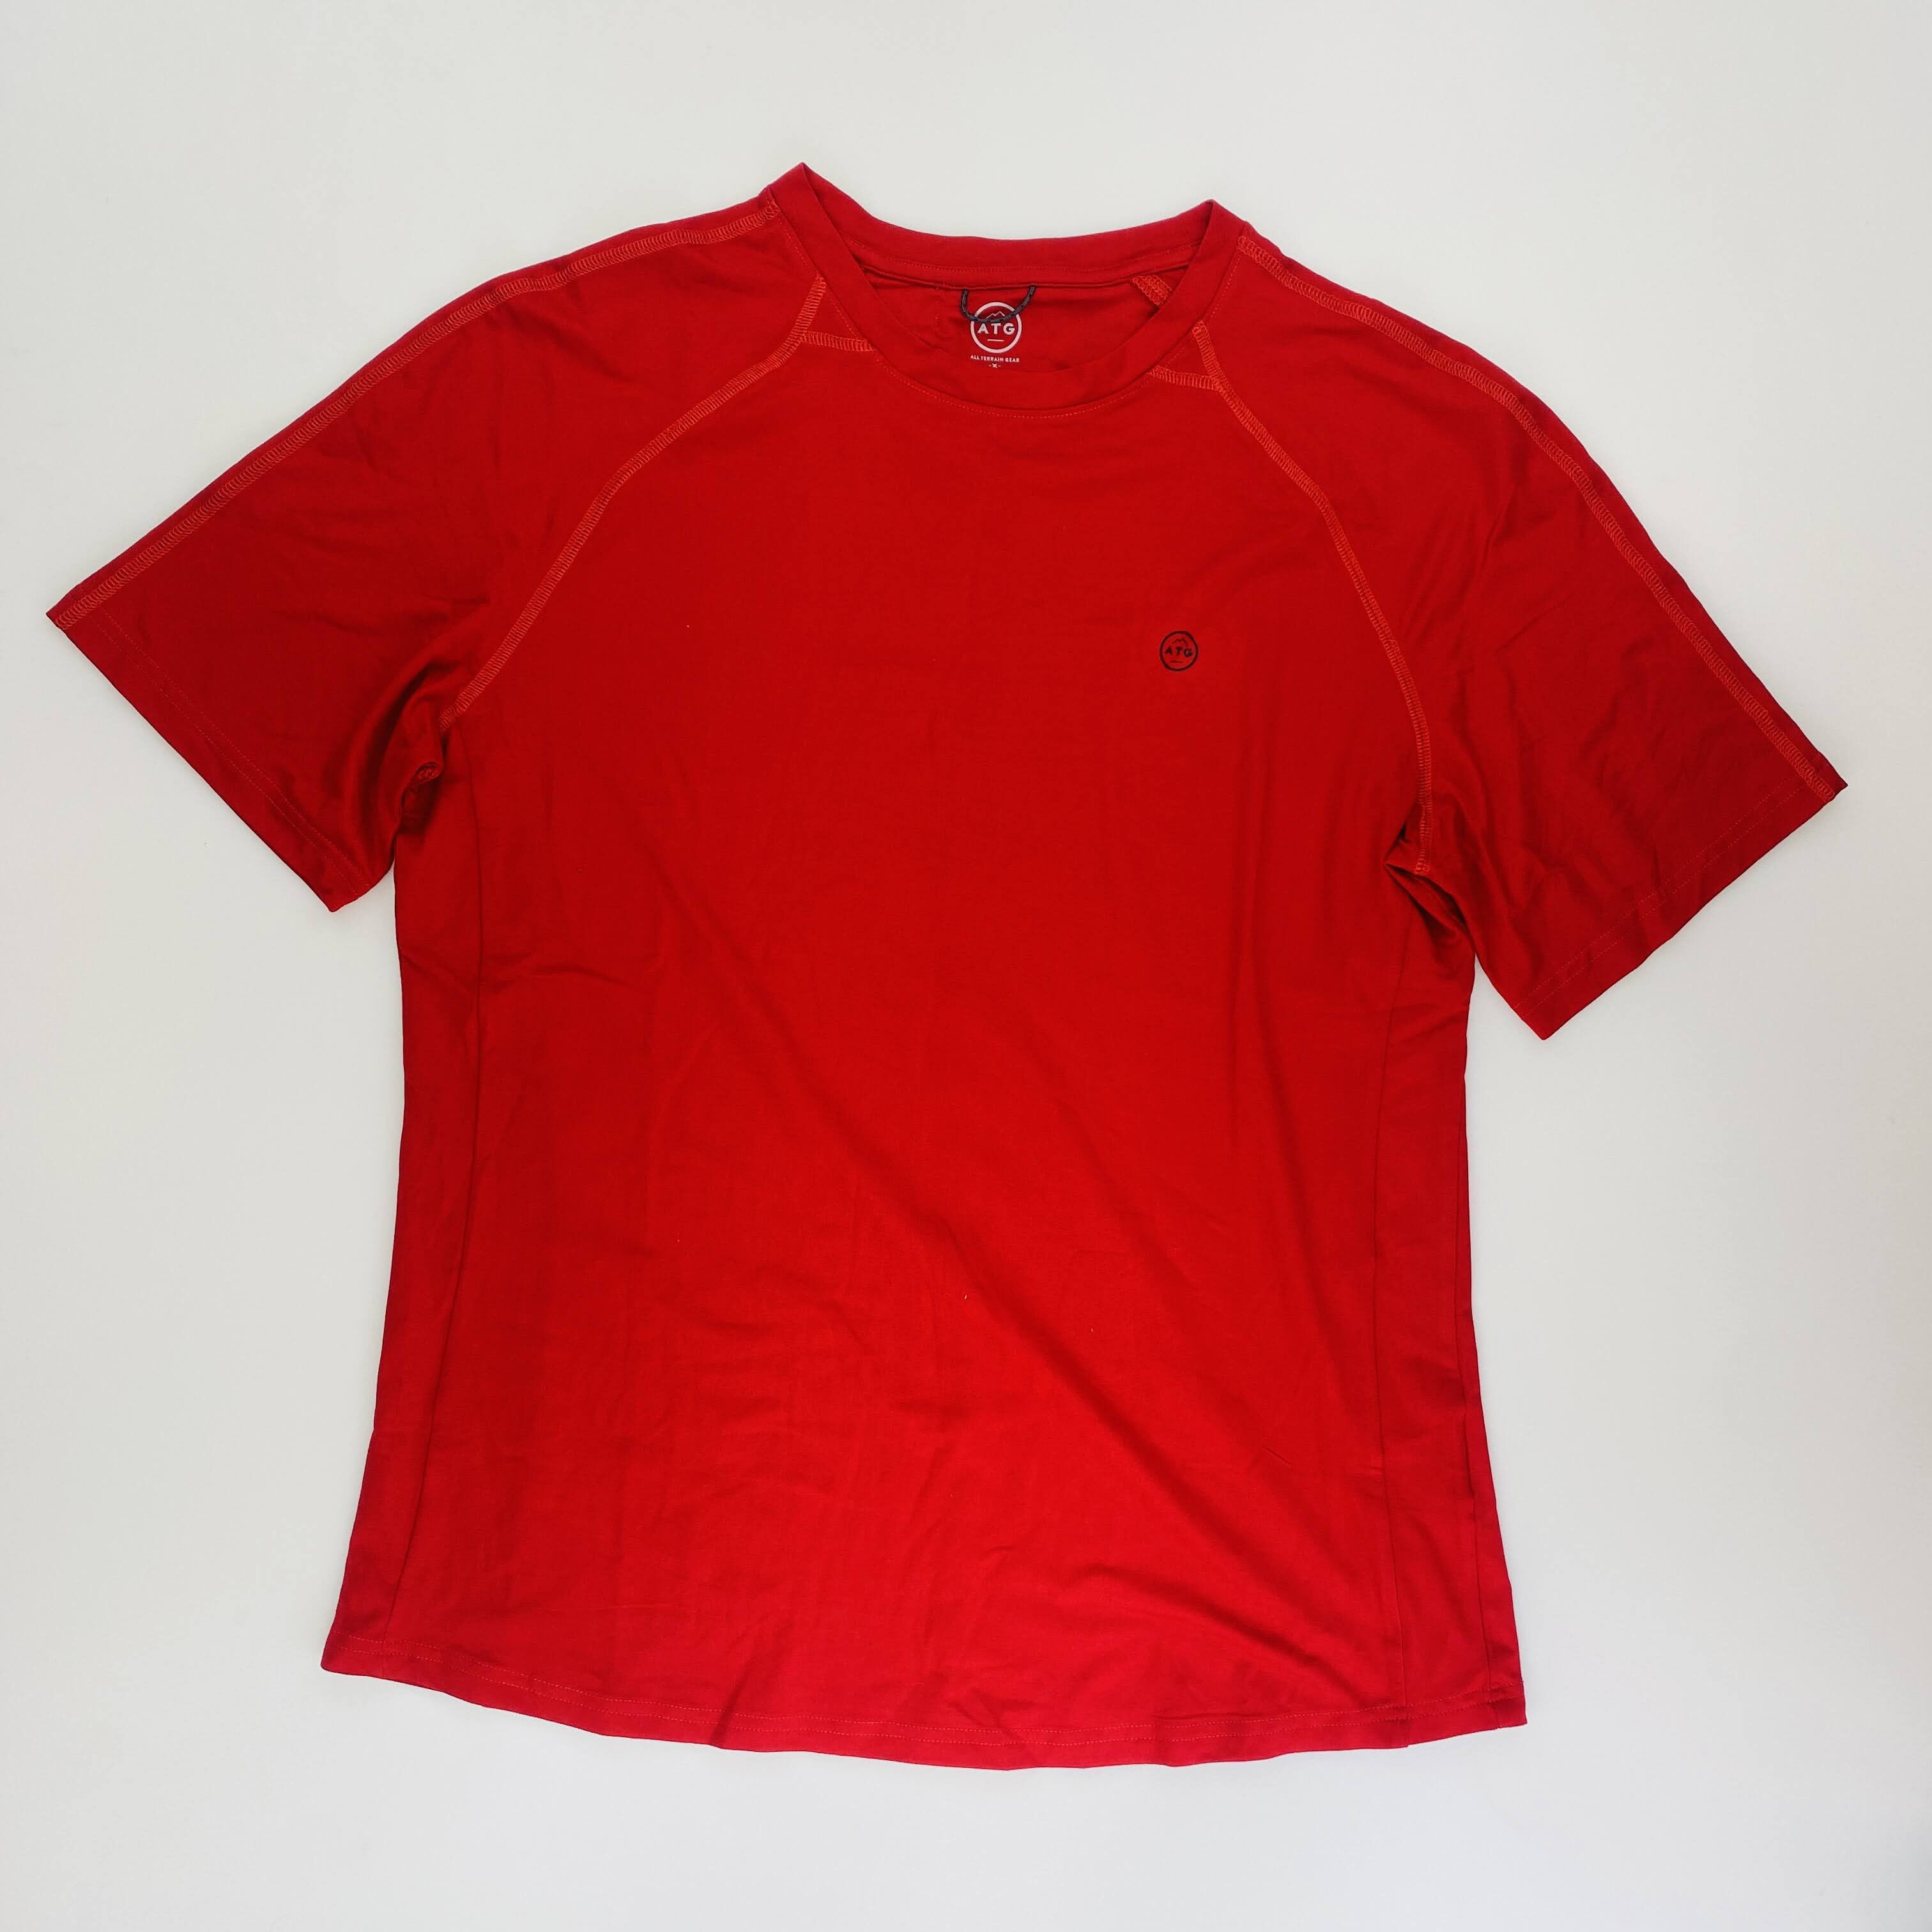 Wrangler Ss Performance T Shirt - Seconde main T-shirt homme - Rouge - XXL | Hardloop